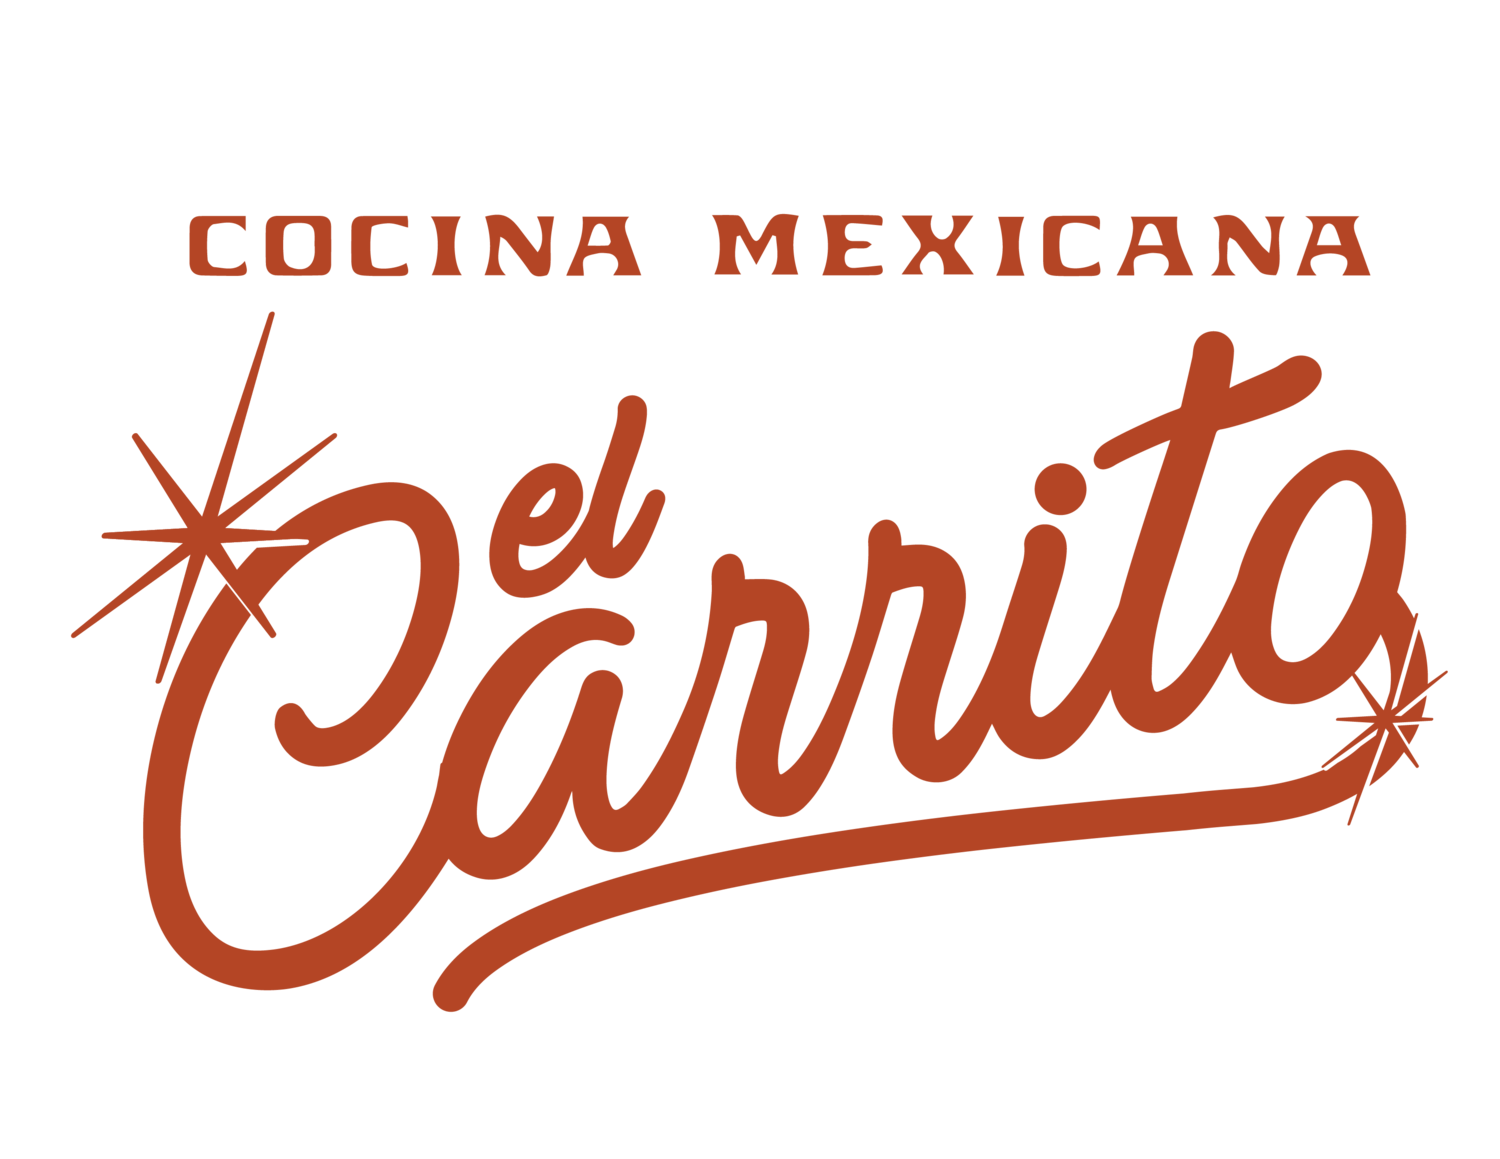 El Carrito Restaurant